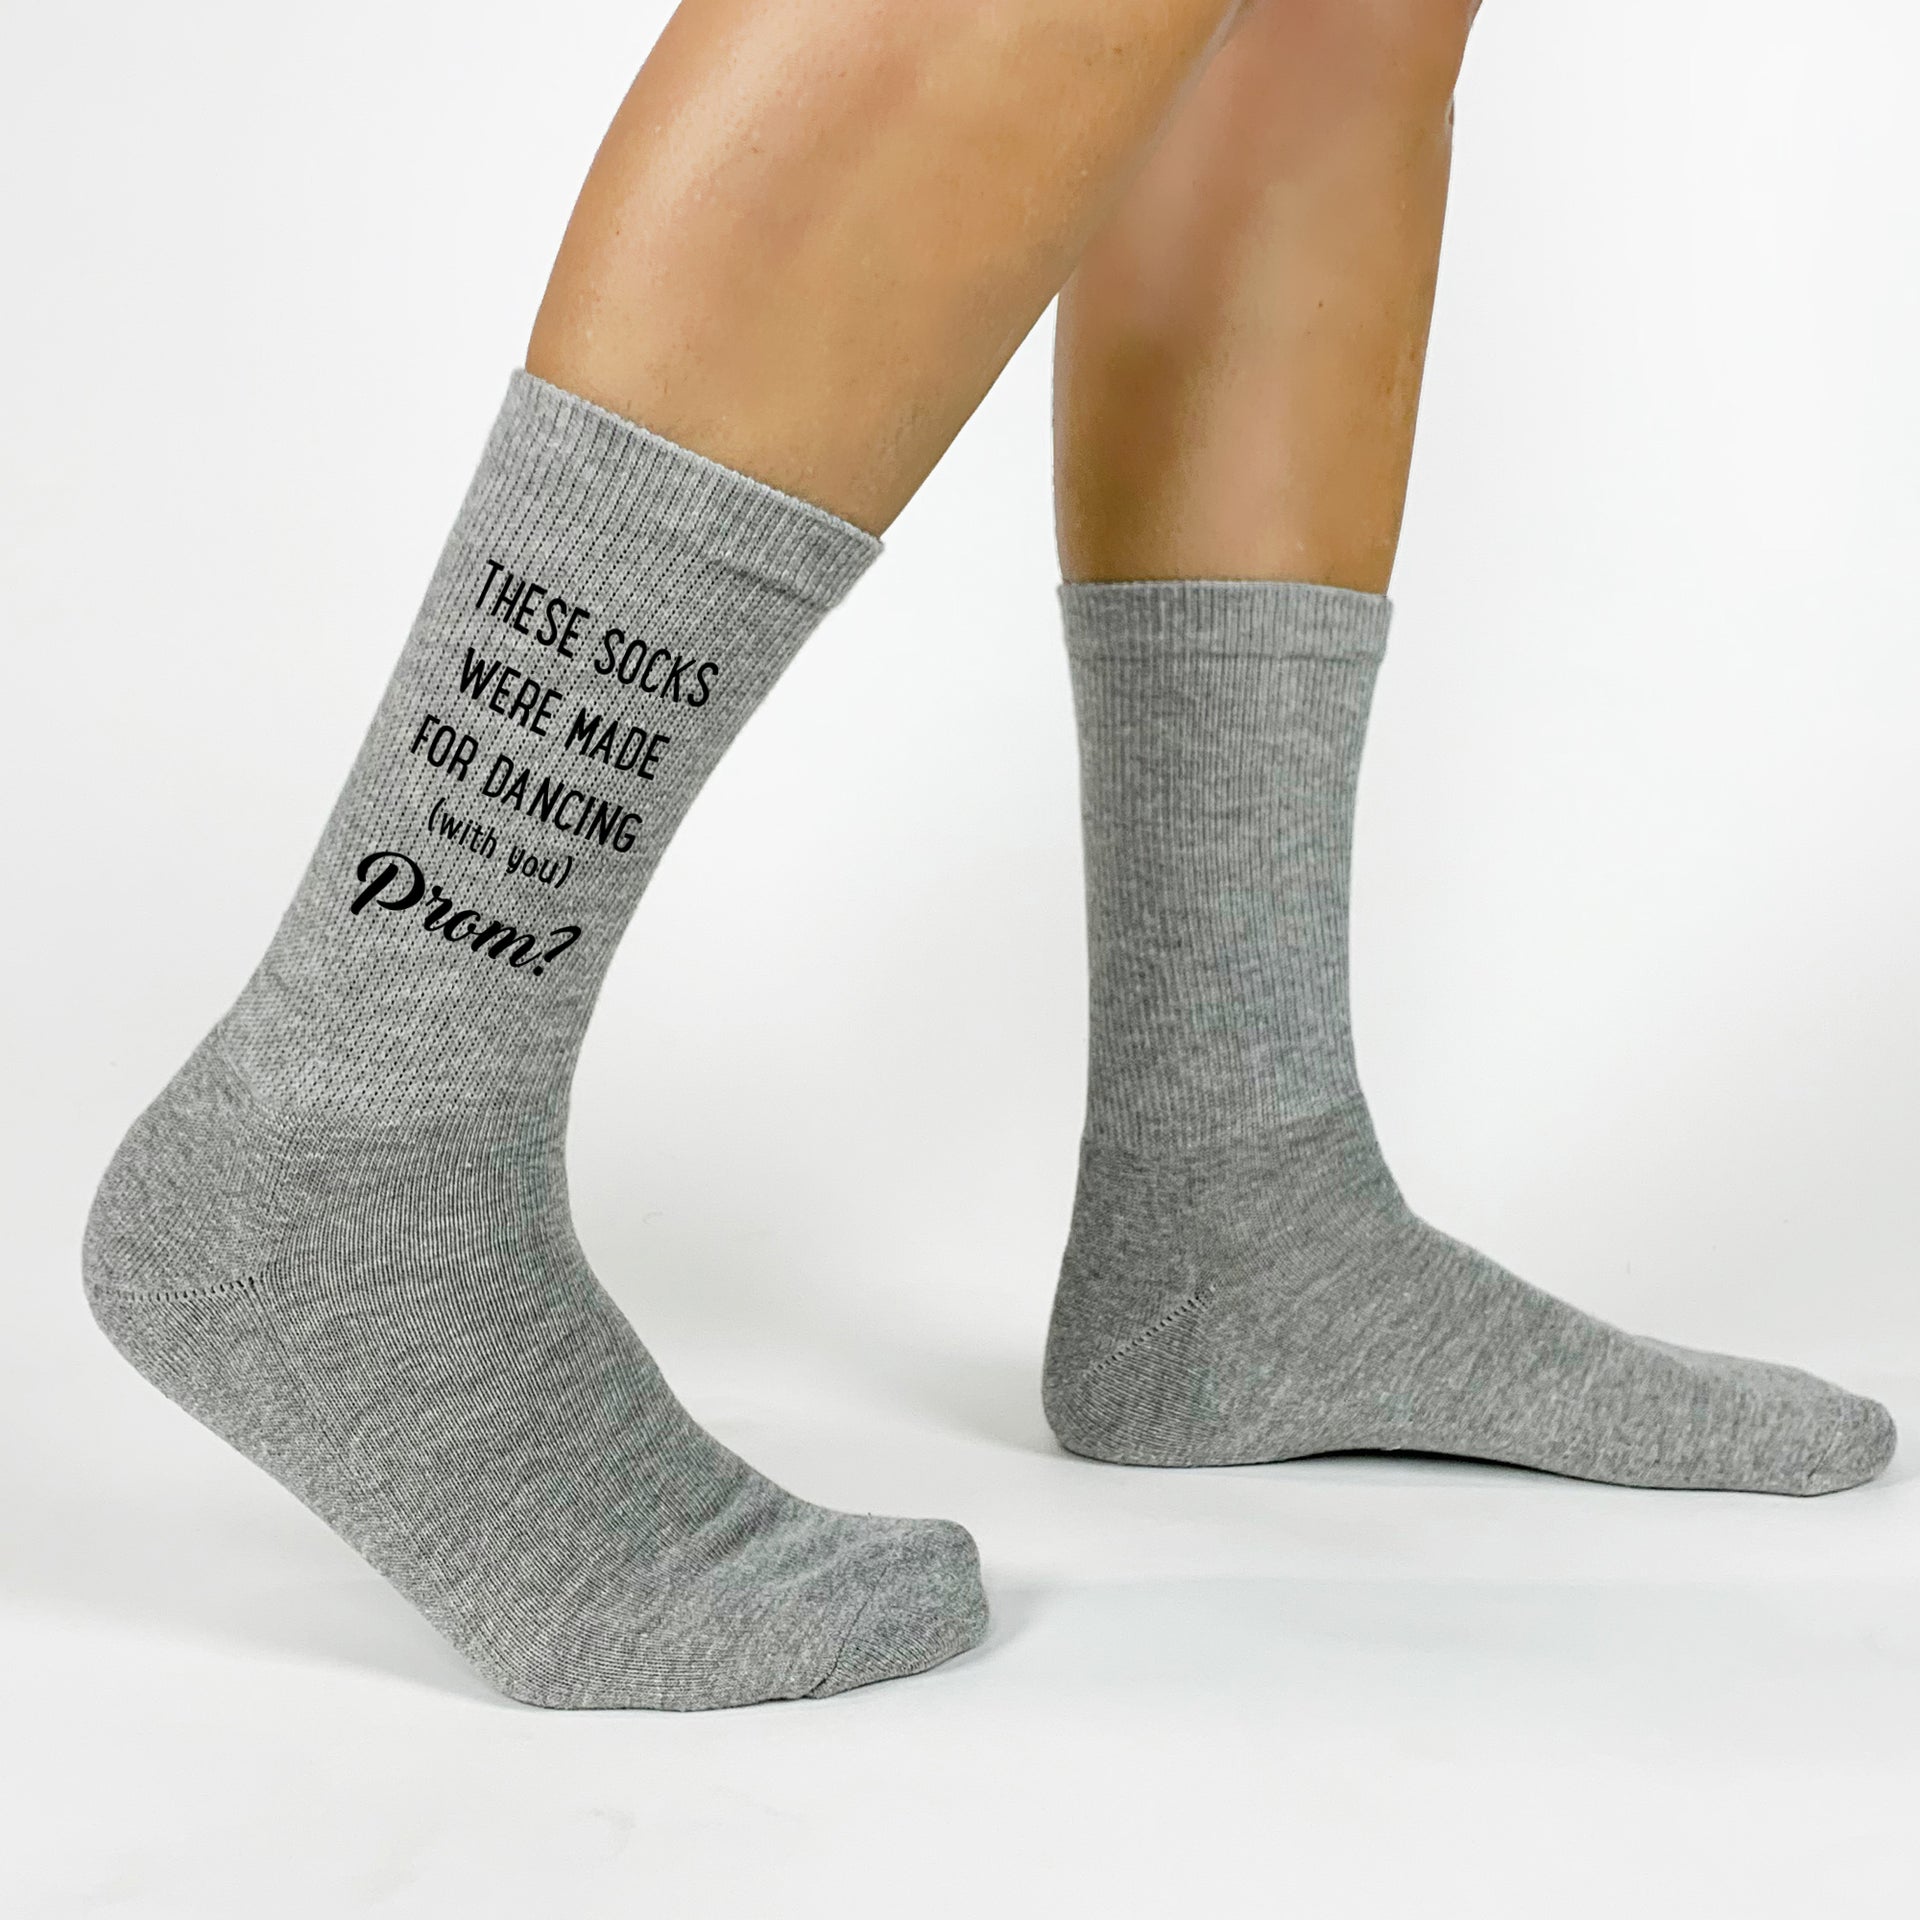 My Goal is Prom - PROMposal Socks - White Cotton Socks